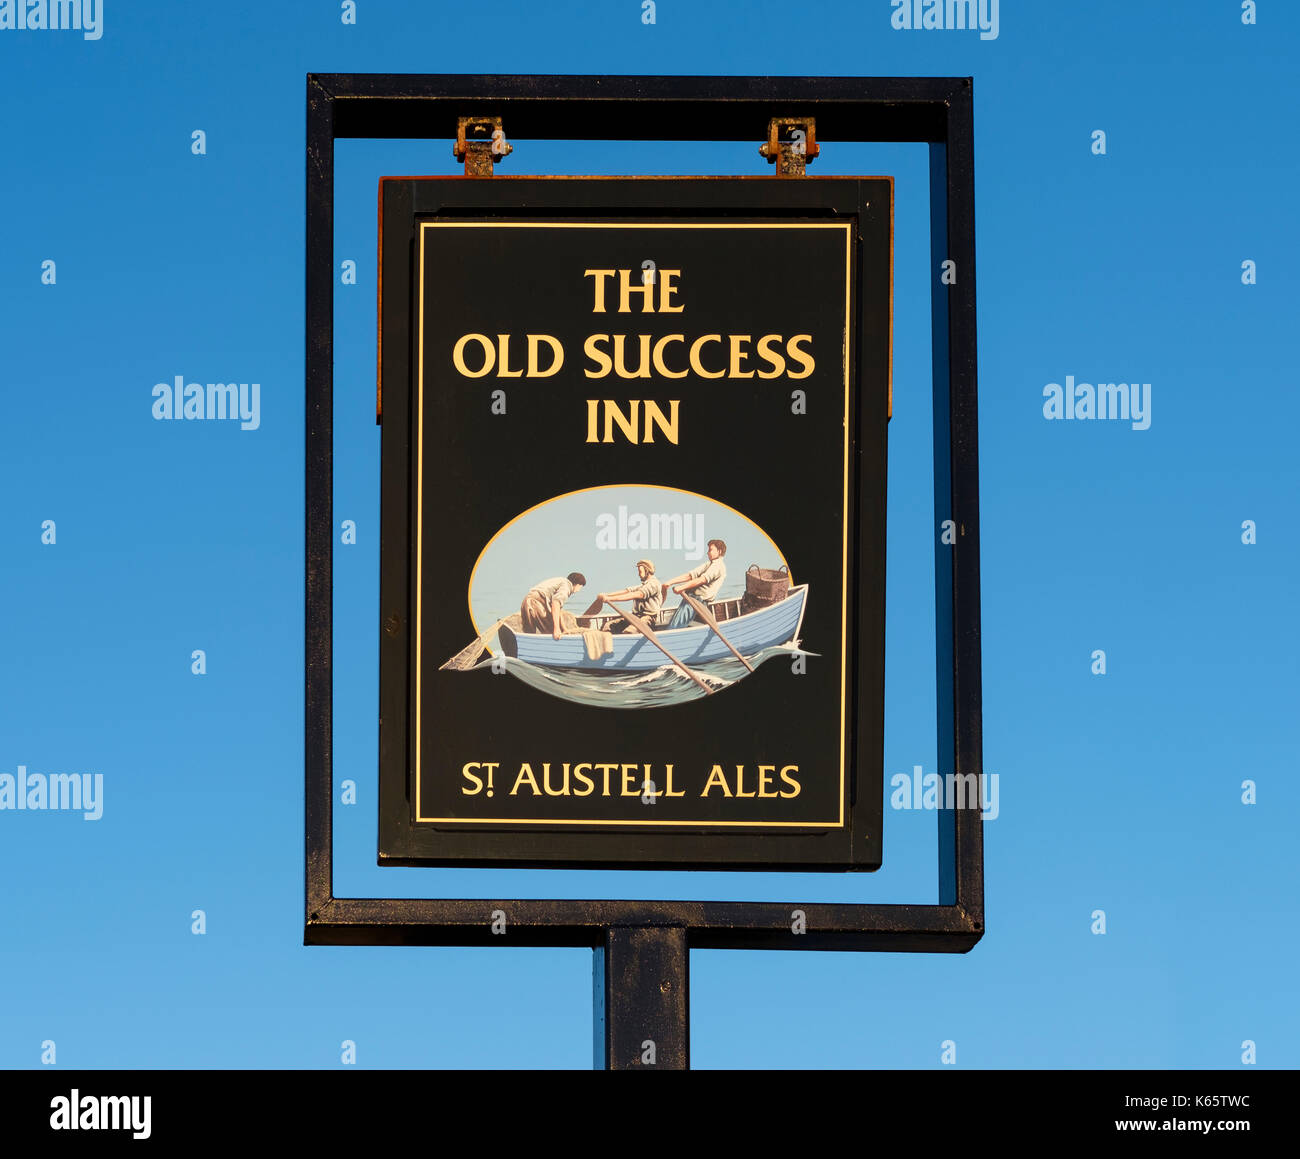 Tavern sign of Old Success Inn, St Austell Ales, Pub, Sennen Cove, Sennen, Sennen, Cornwall, England, Great Britain Stock Photo